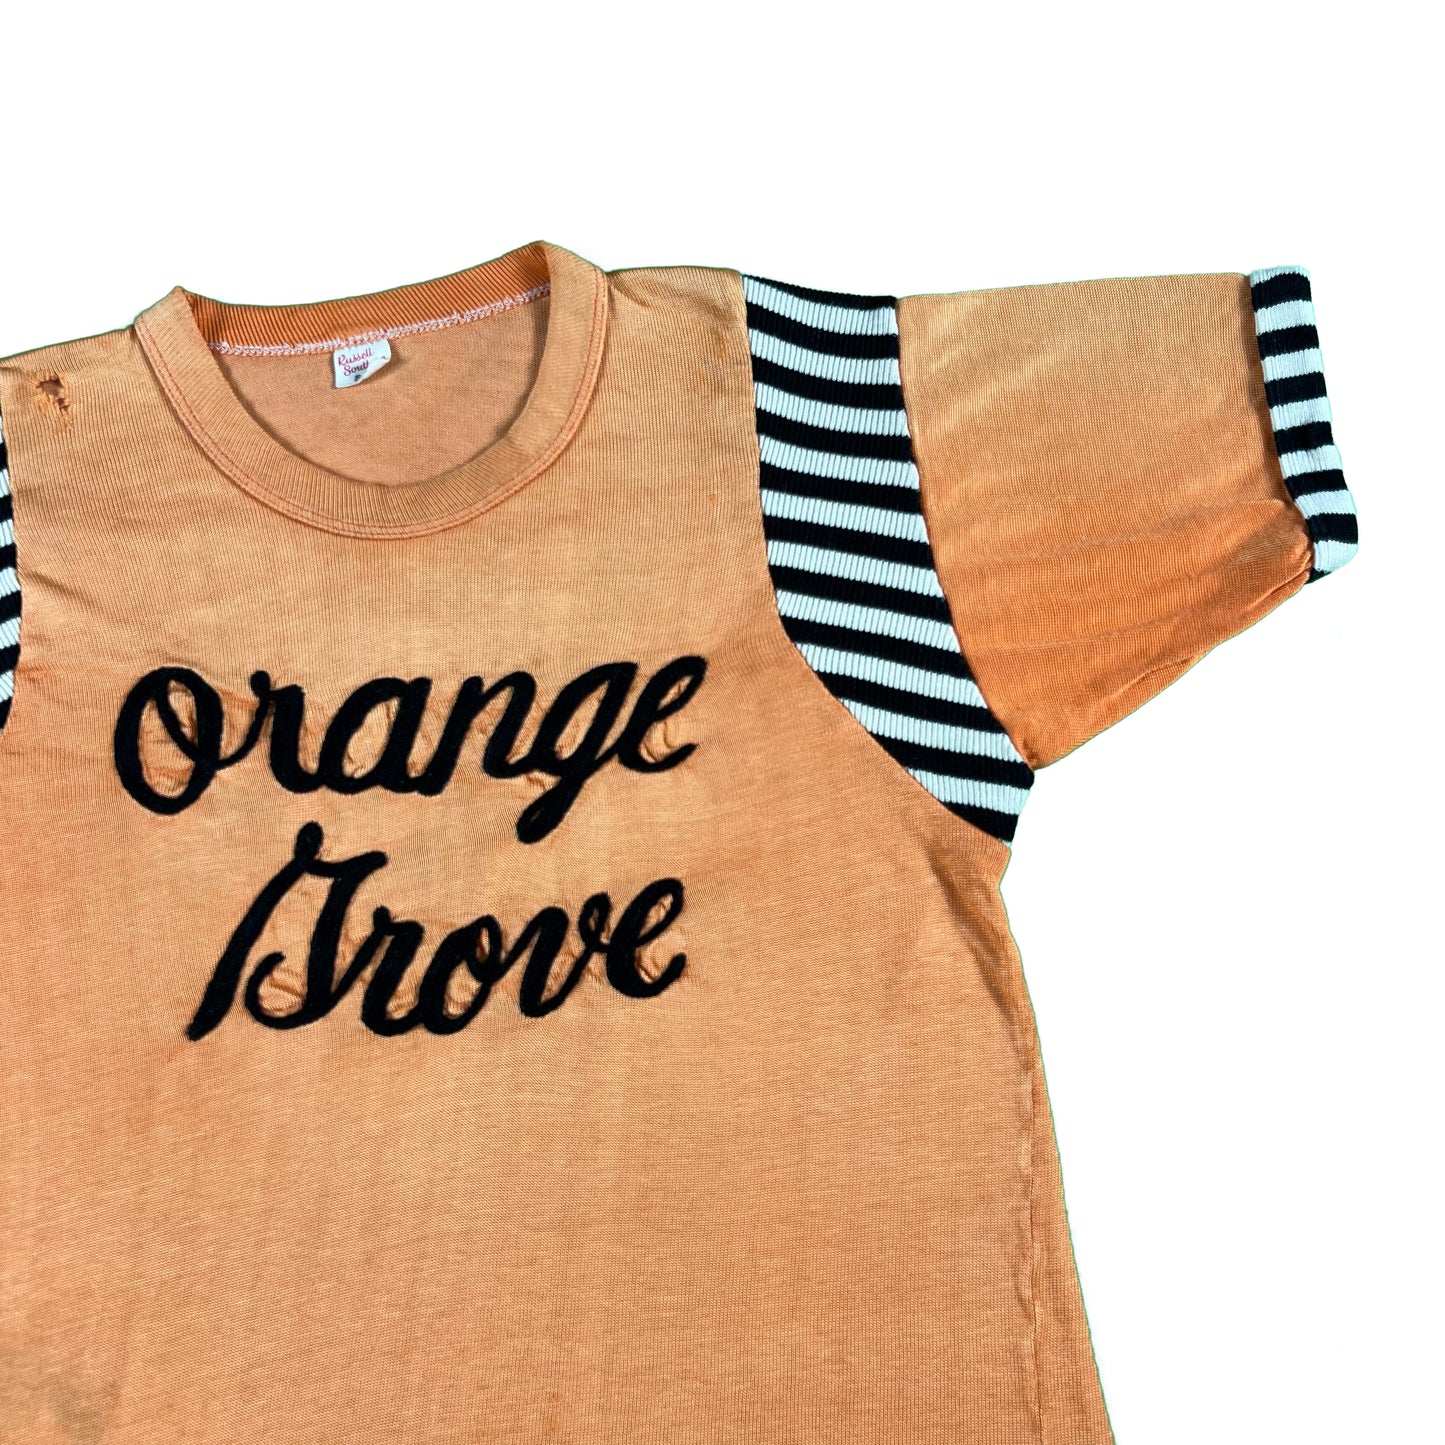 50s 'Orange Grove' Russell Durene Jersey- XS